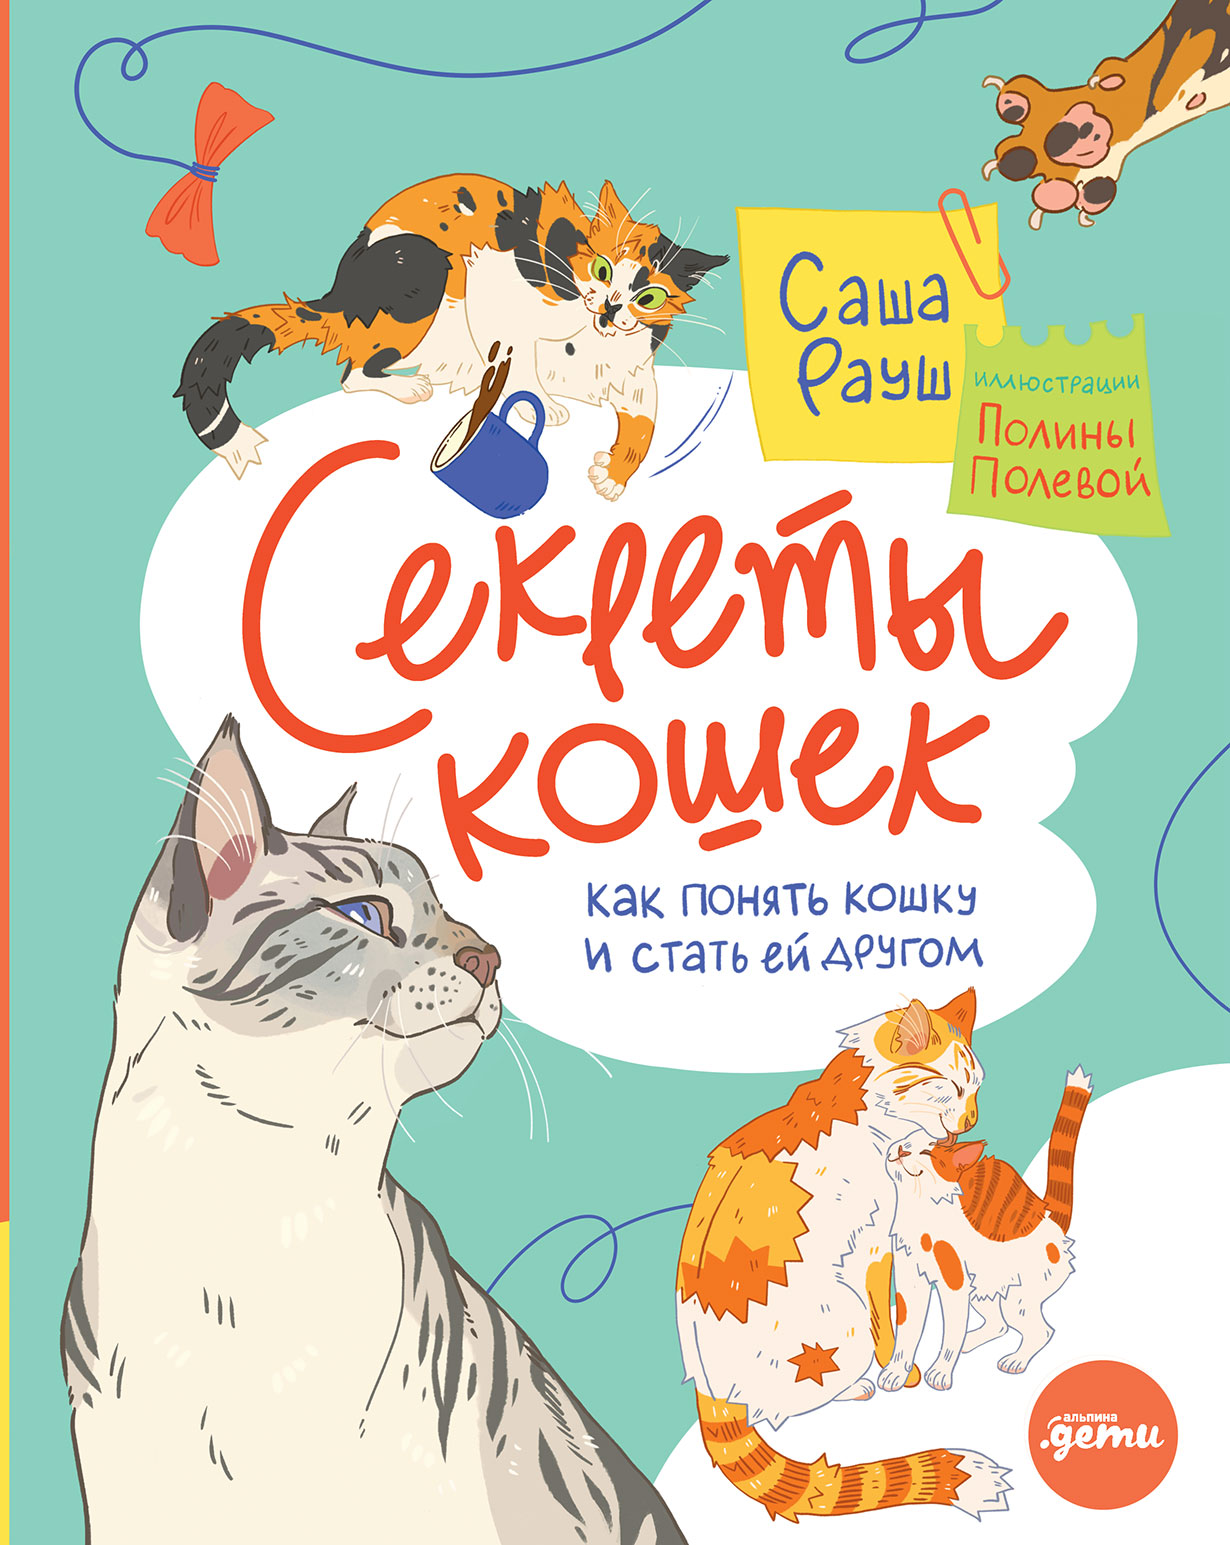 Книжки про котиков